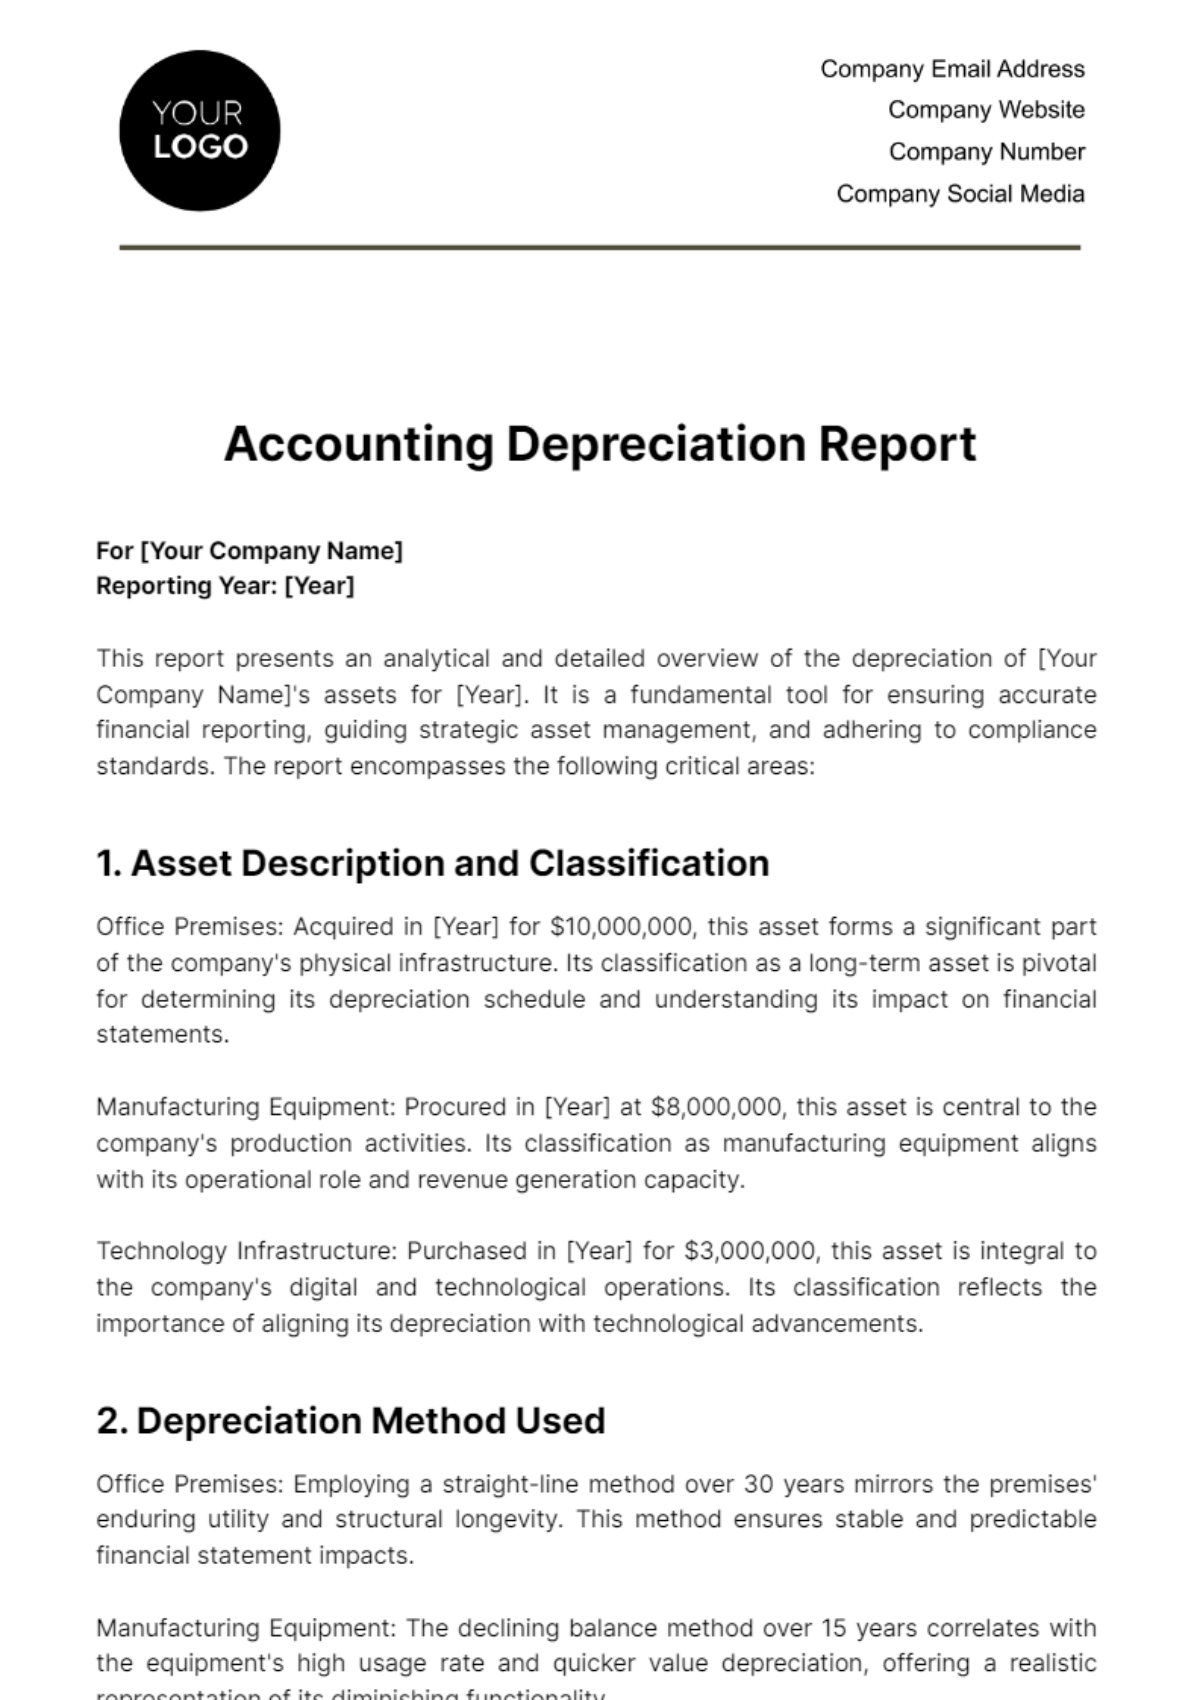 Accounting Depreciation Report Template